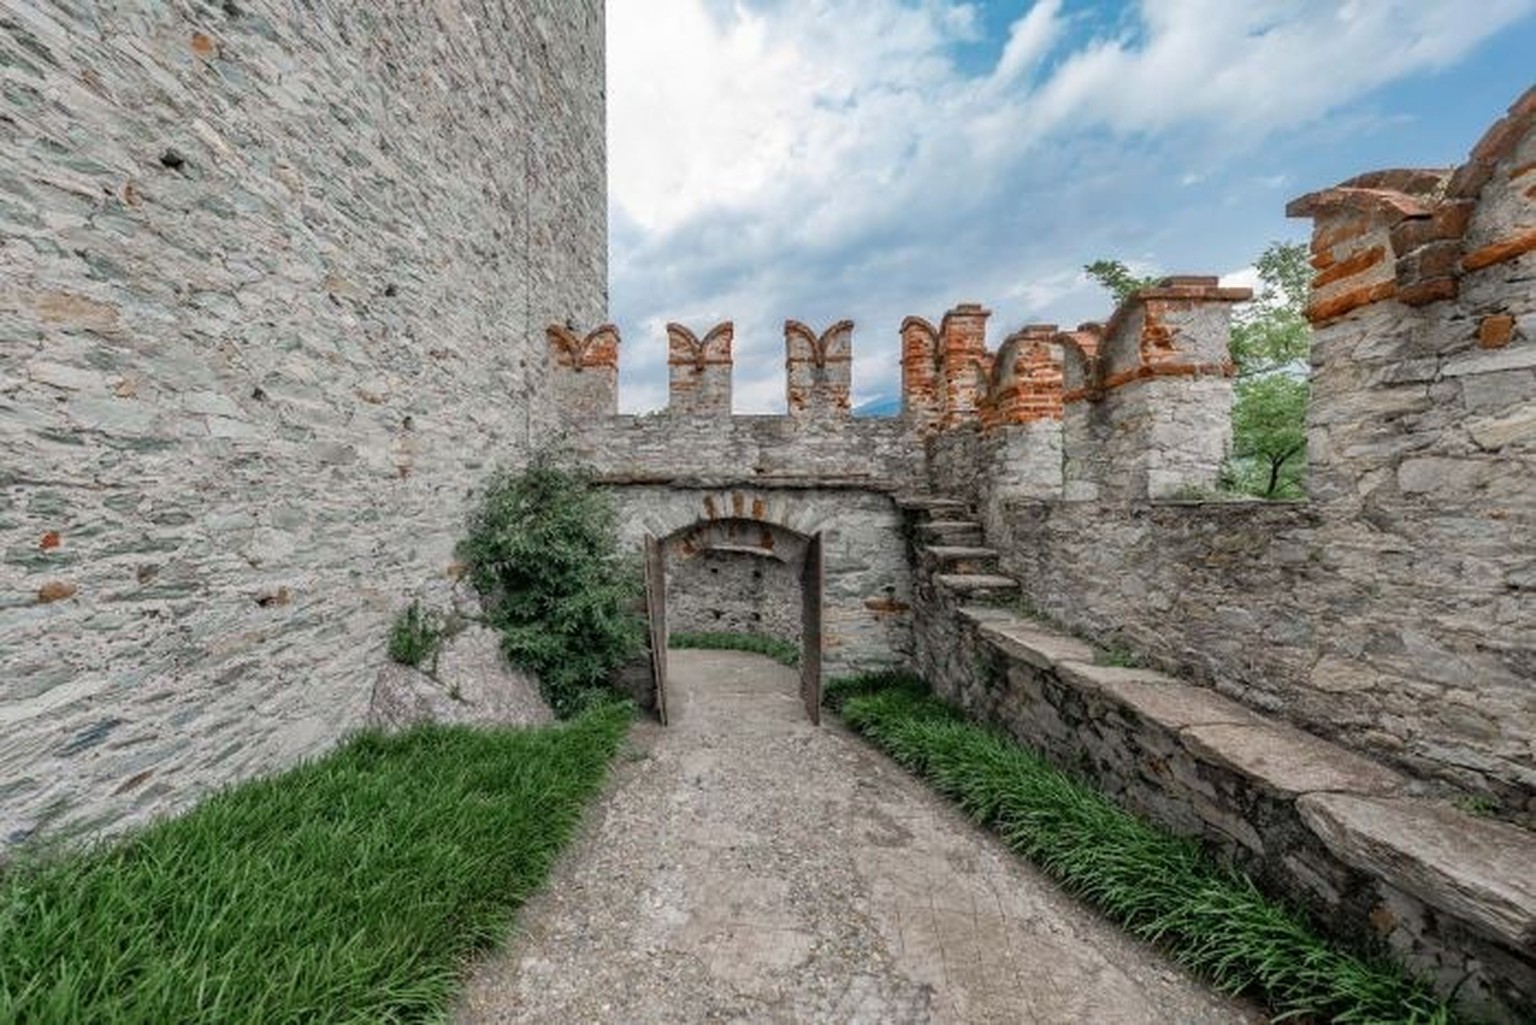 Schloss italien piemonte 
https://www.youtube.com/watch?v=glqSewRQiOY